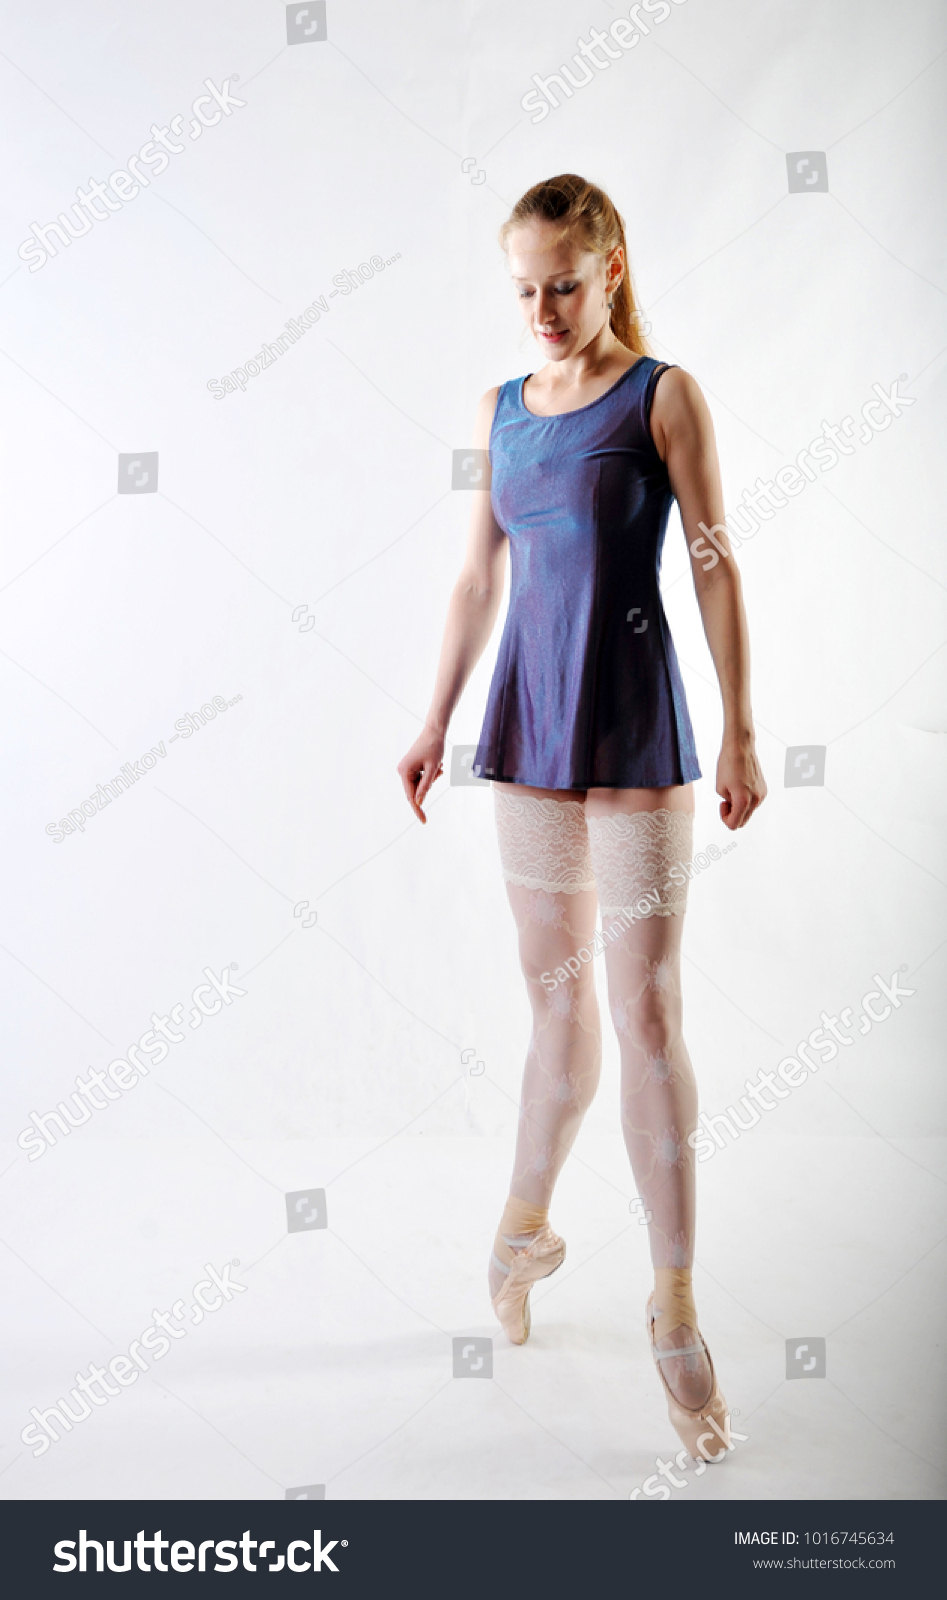 Ballerina Stockings Photo 1016745634